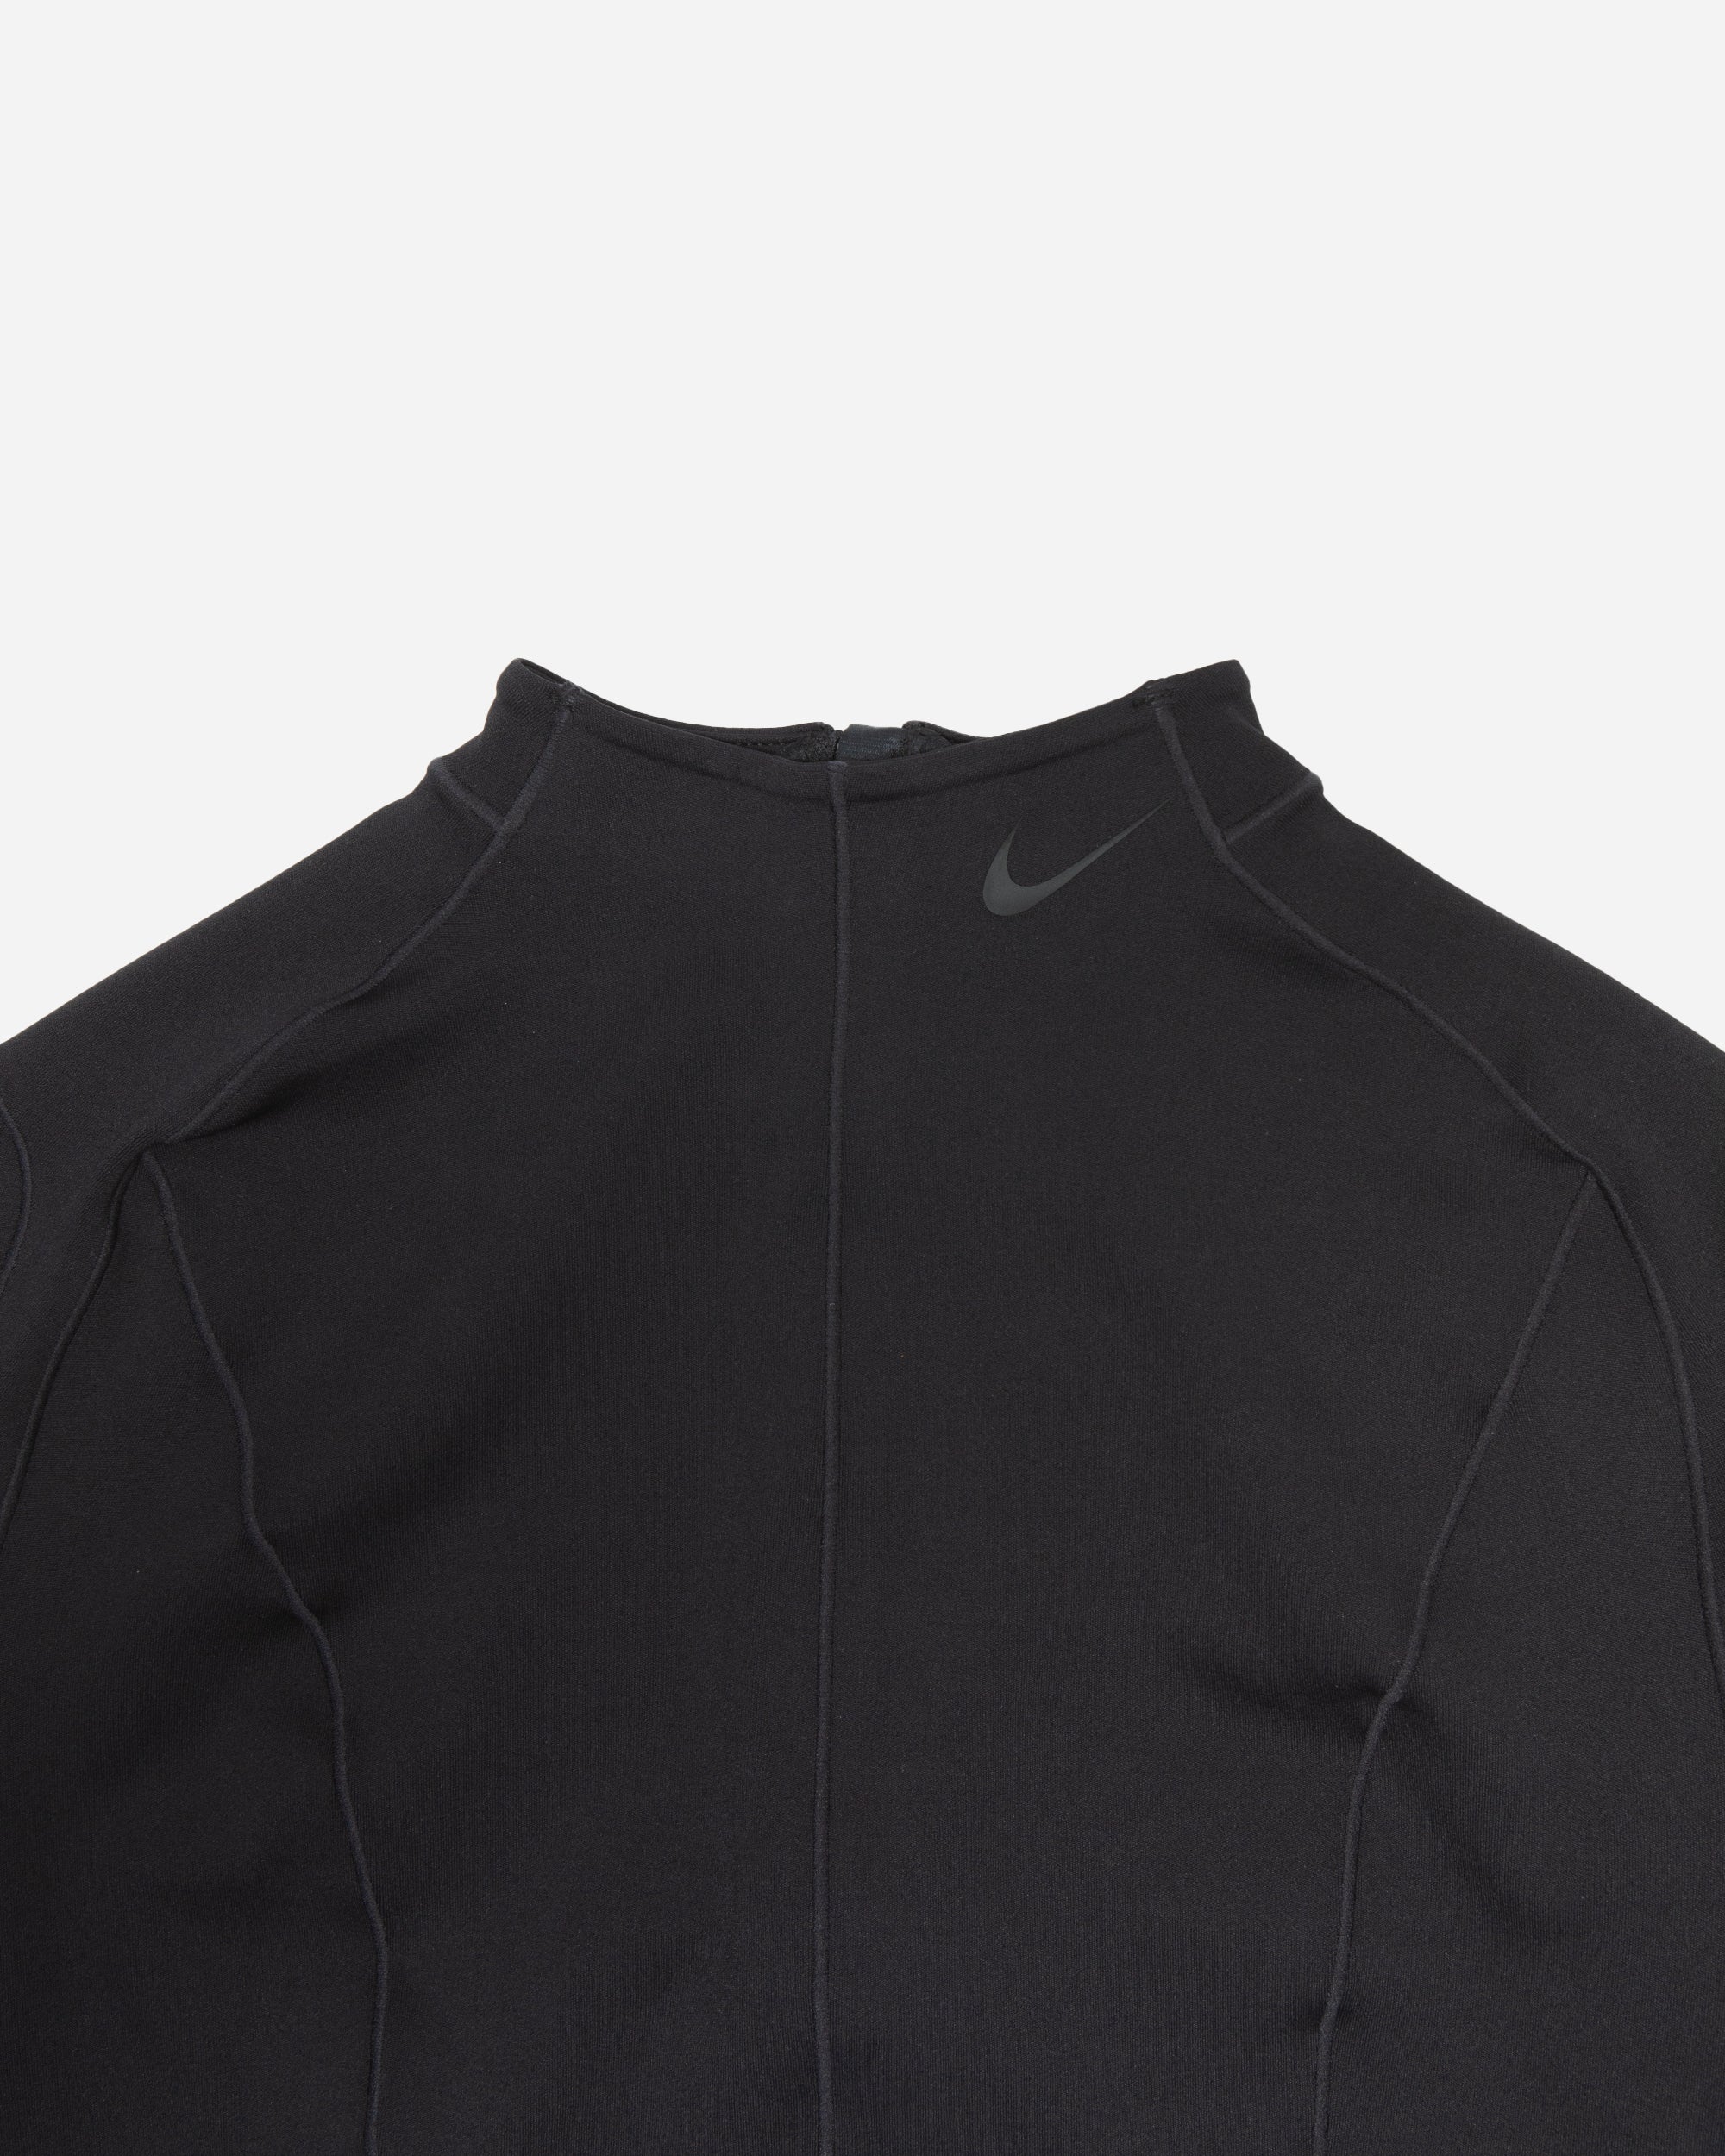 Nike Nike x Off-White Long sleeve Top BLACK DV5558-010